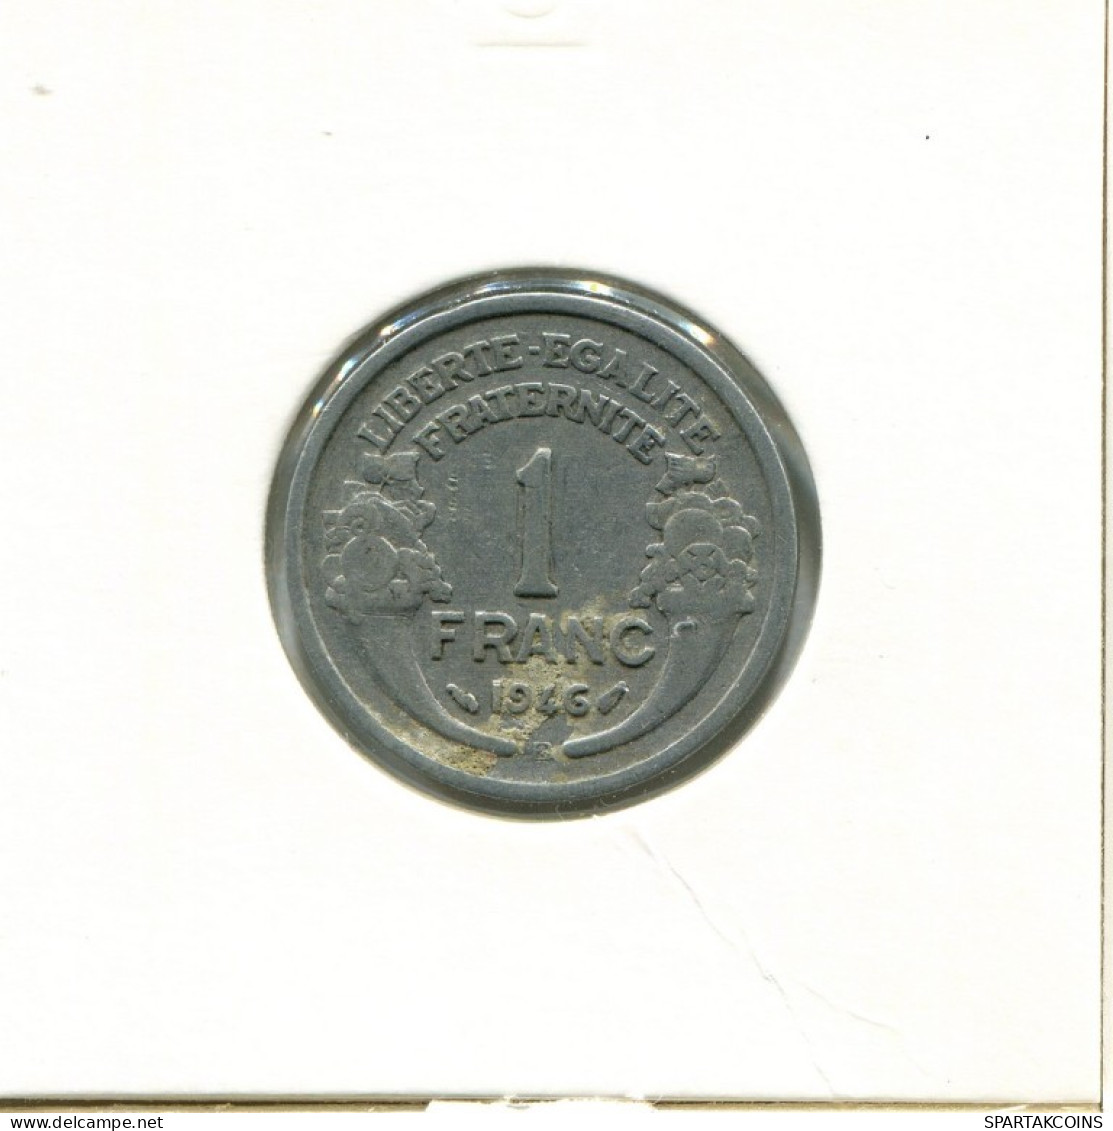 1 FRANC 1946 B FRANKREICH FRANCE Französisch Münze #AK563.D.A - 1 Franc